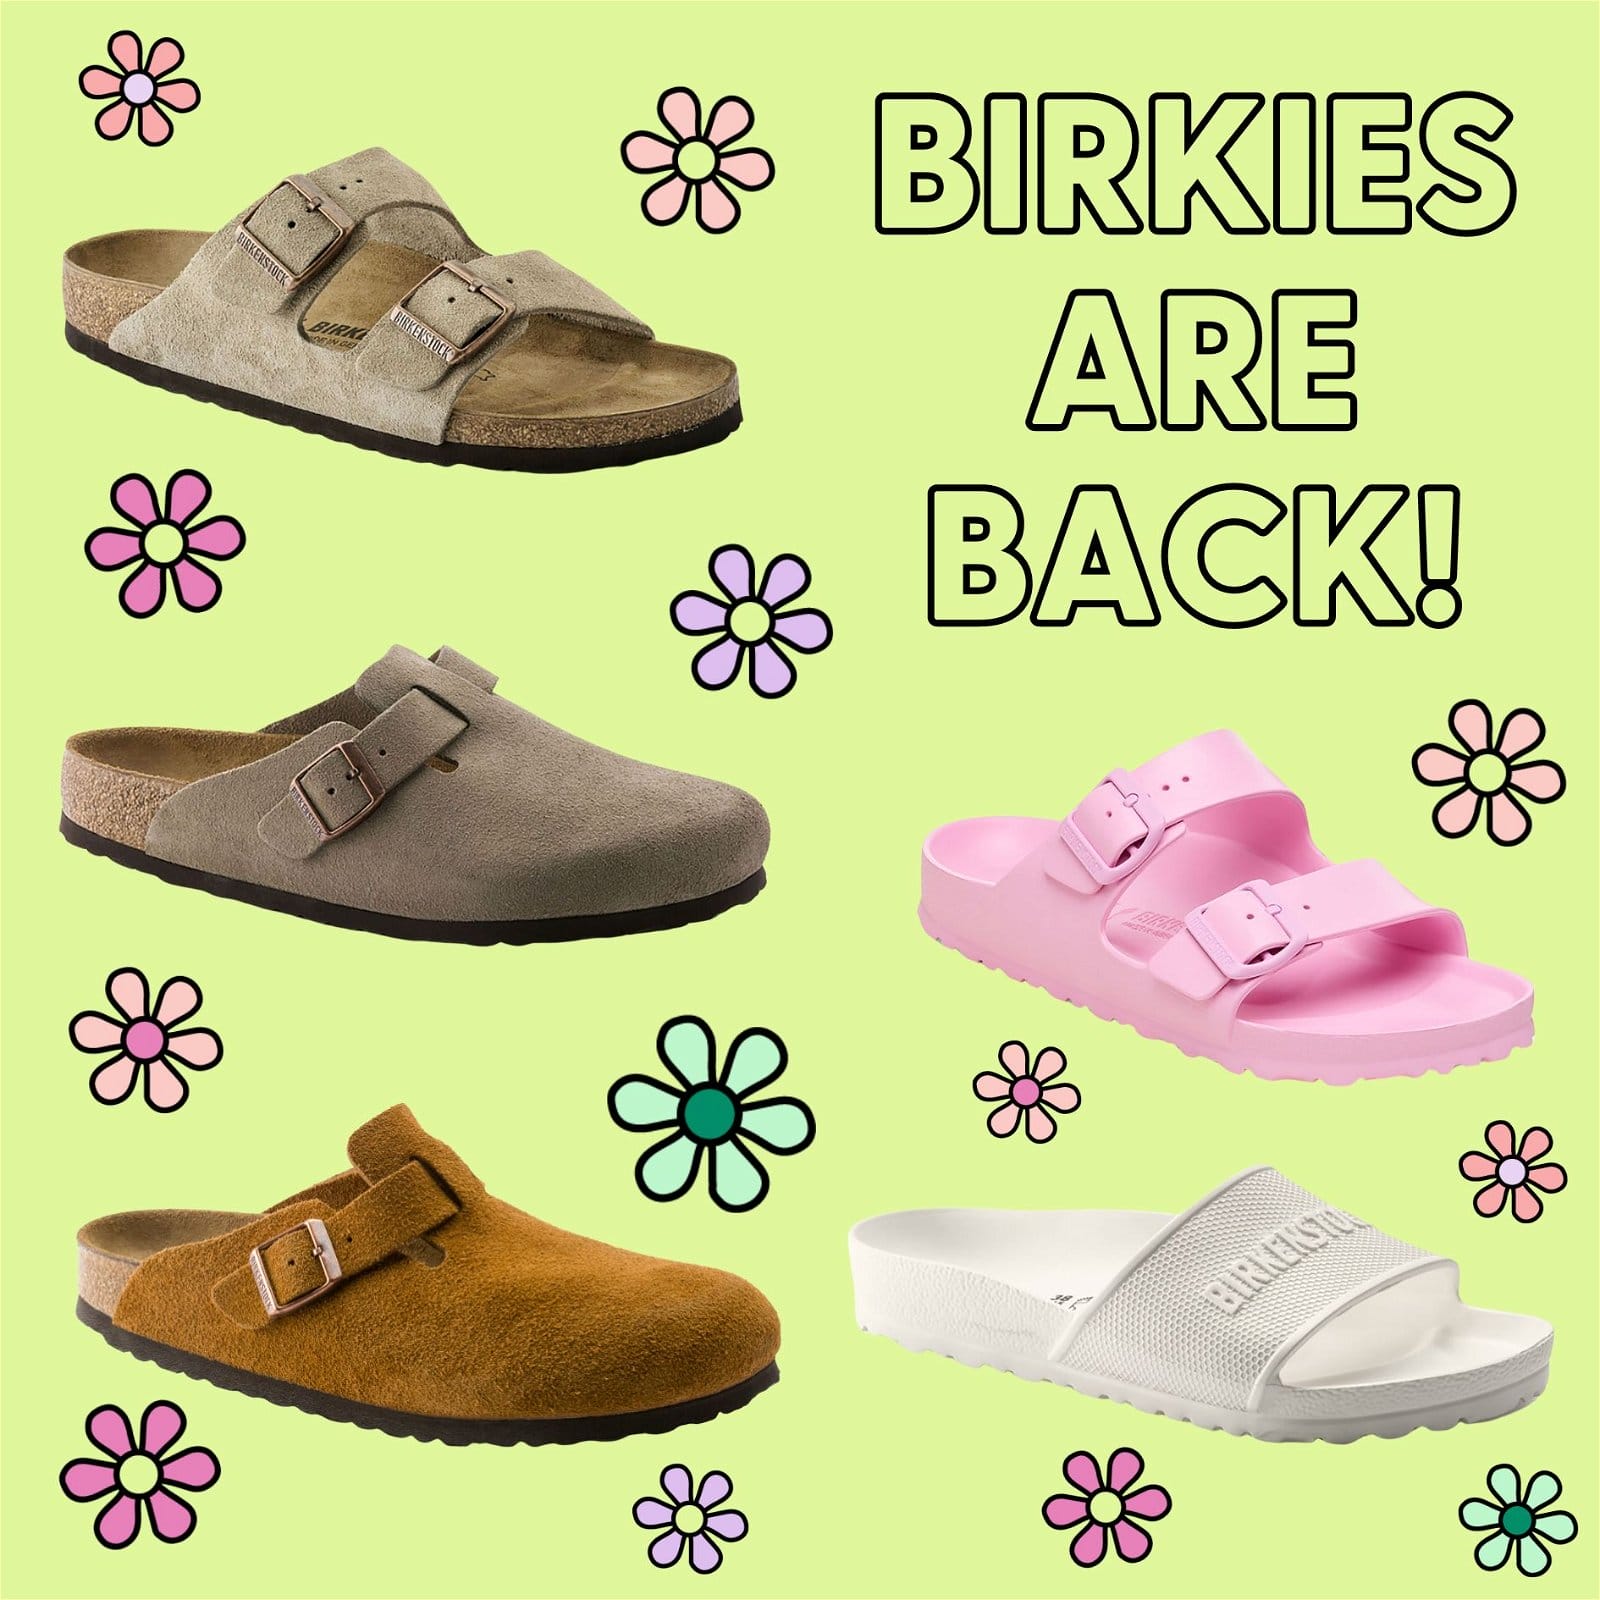 Birkies are Back!